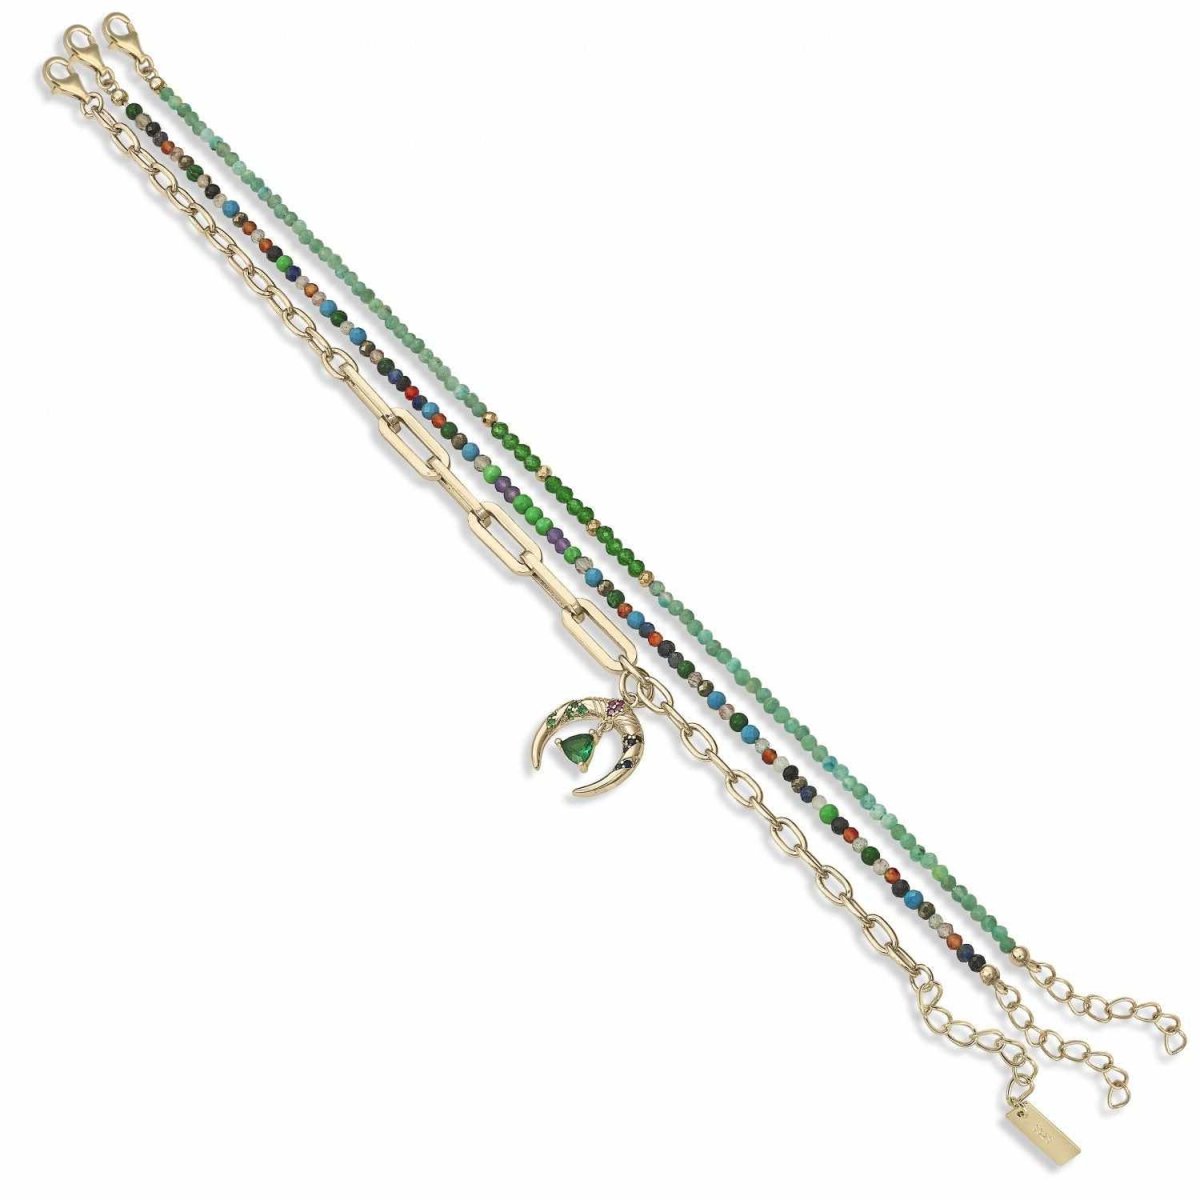 Bracelets - Thin bracelets three bracelets design with antler motif